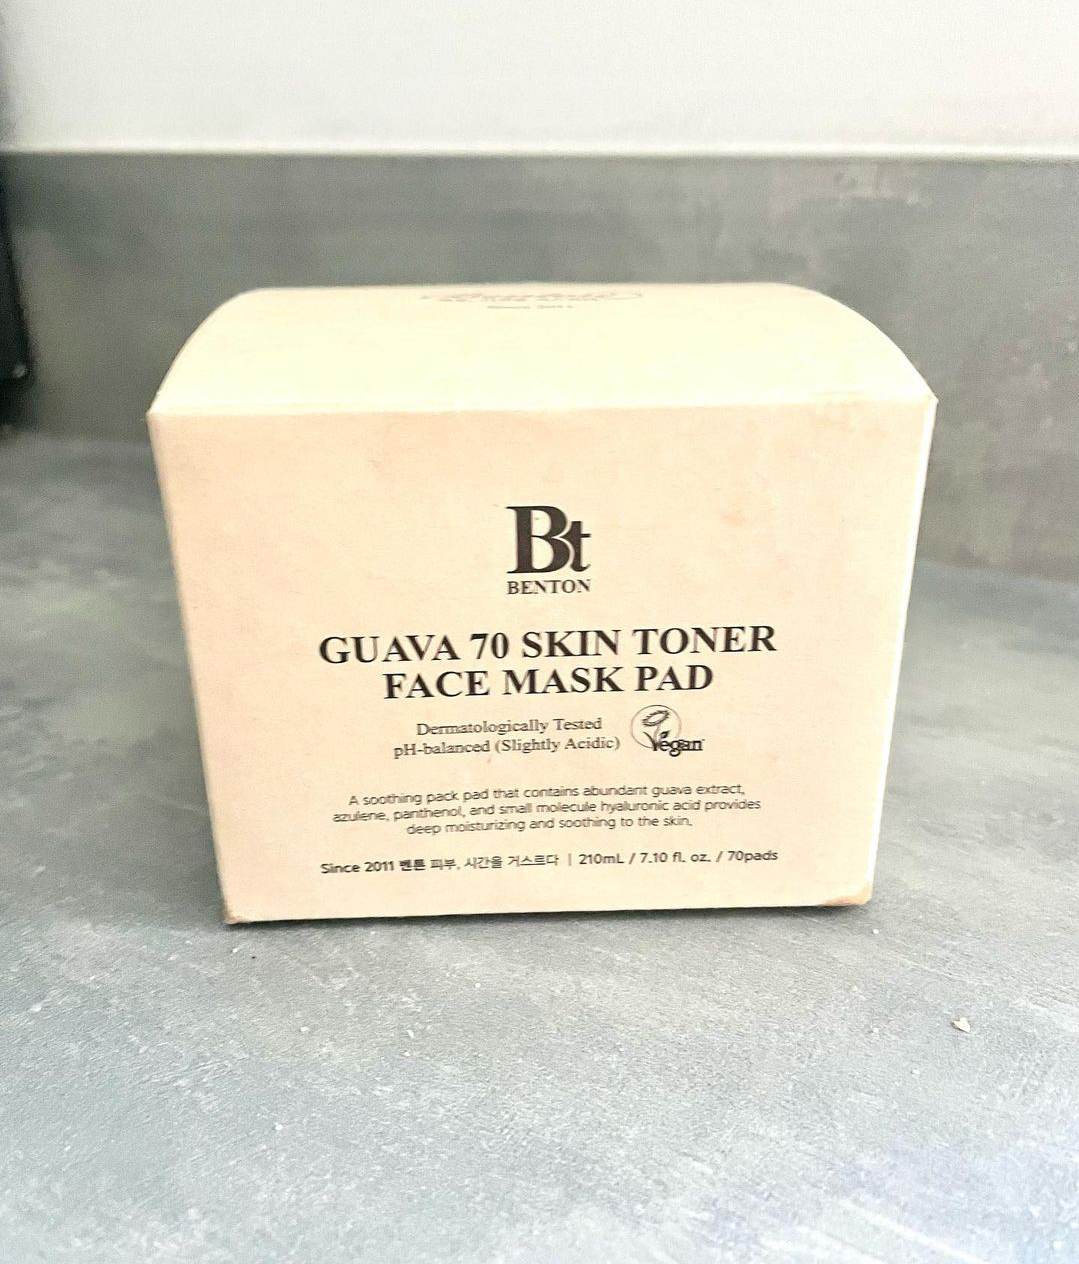 Benton Guava 70 Skin Toner Face Mask Pad| Review